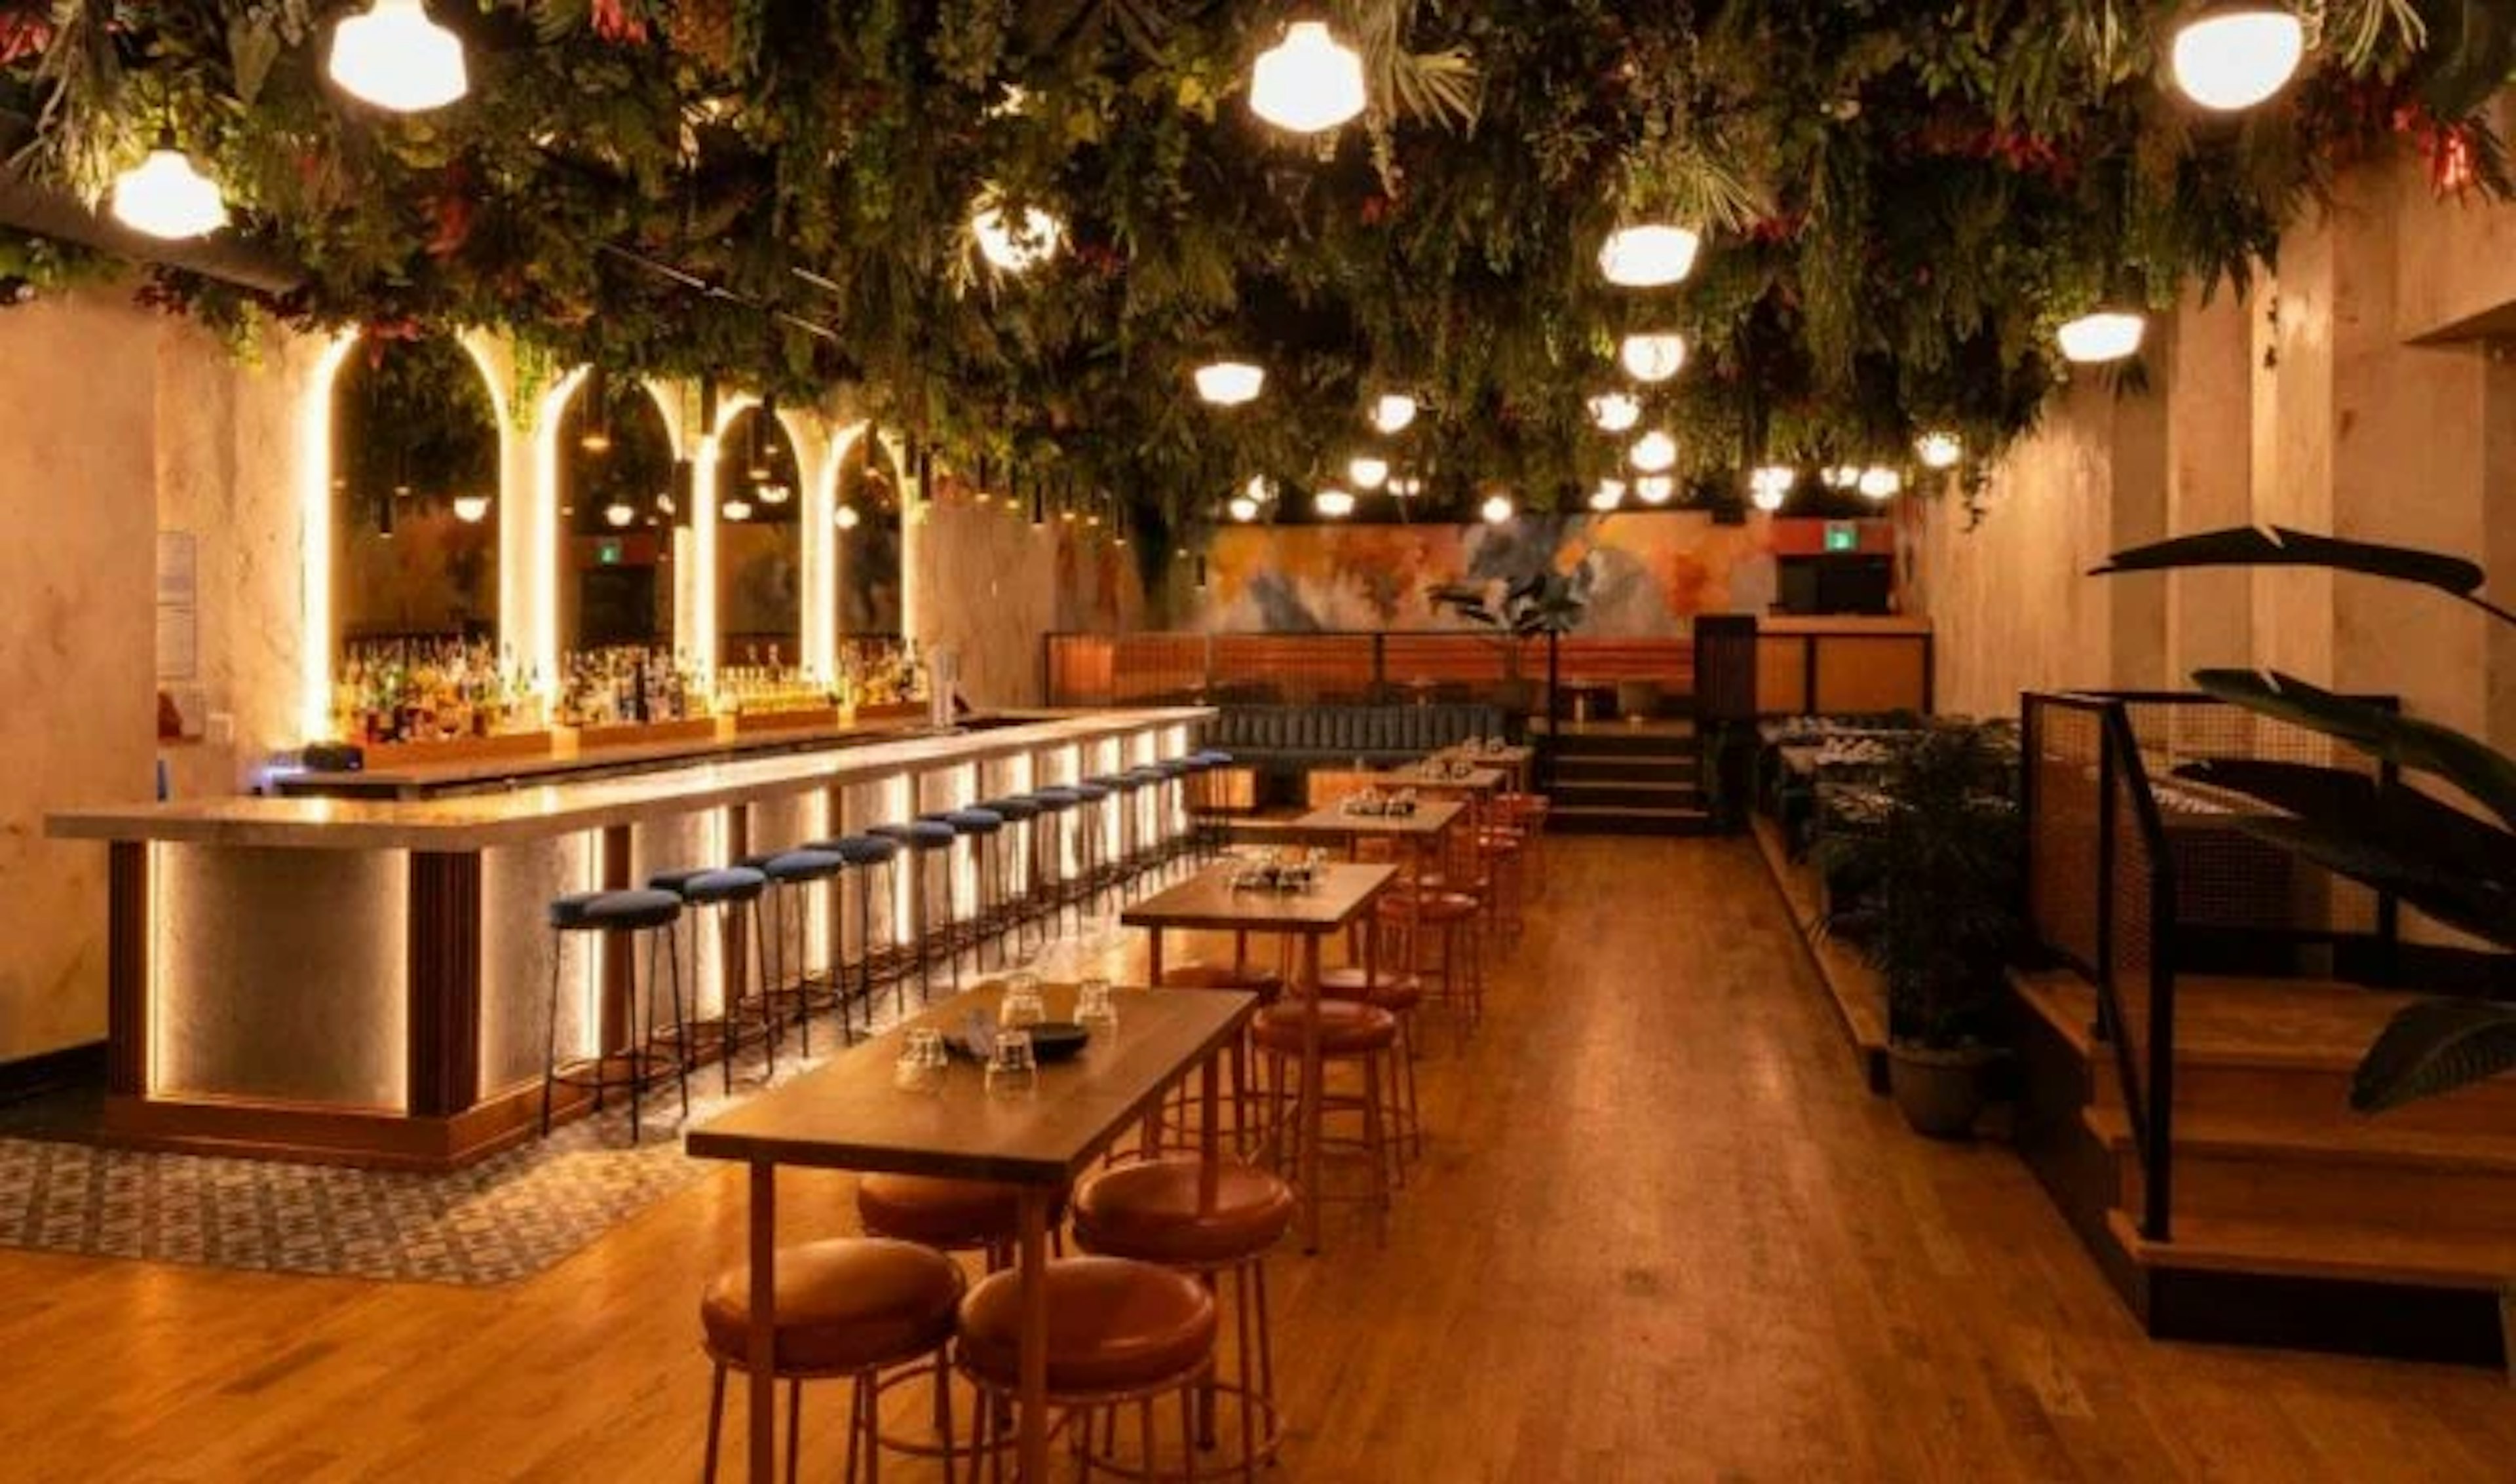 Lobby Bar Restaurant | Private & Corporate Events Toronto | Full Venue Image